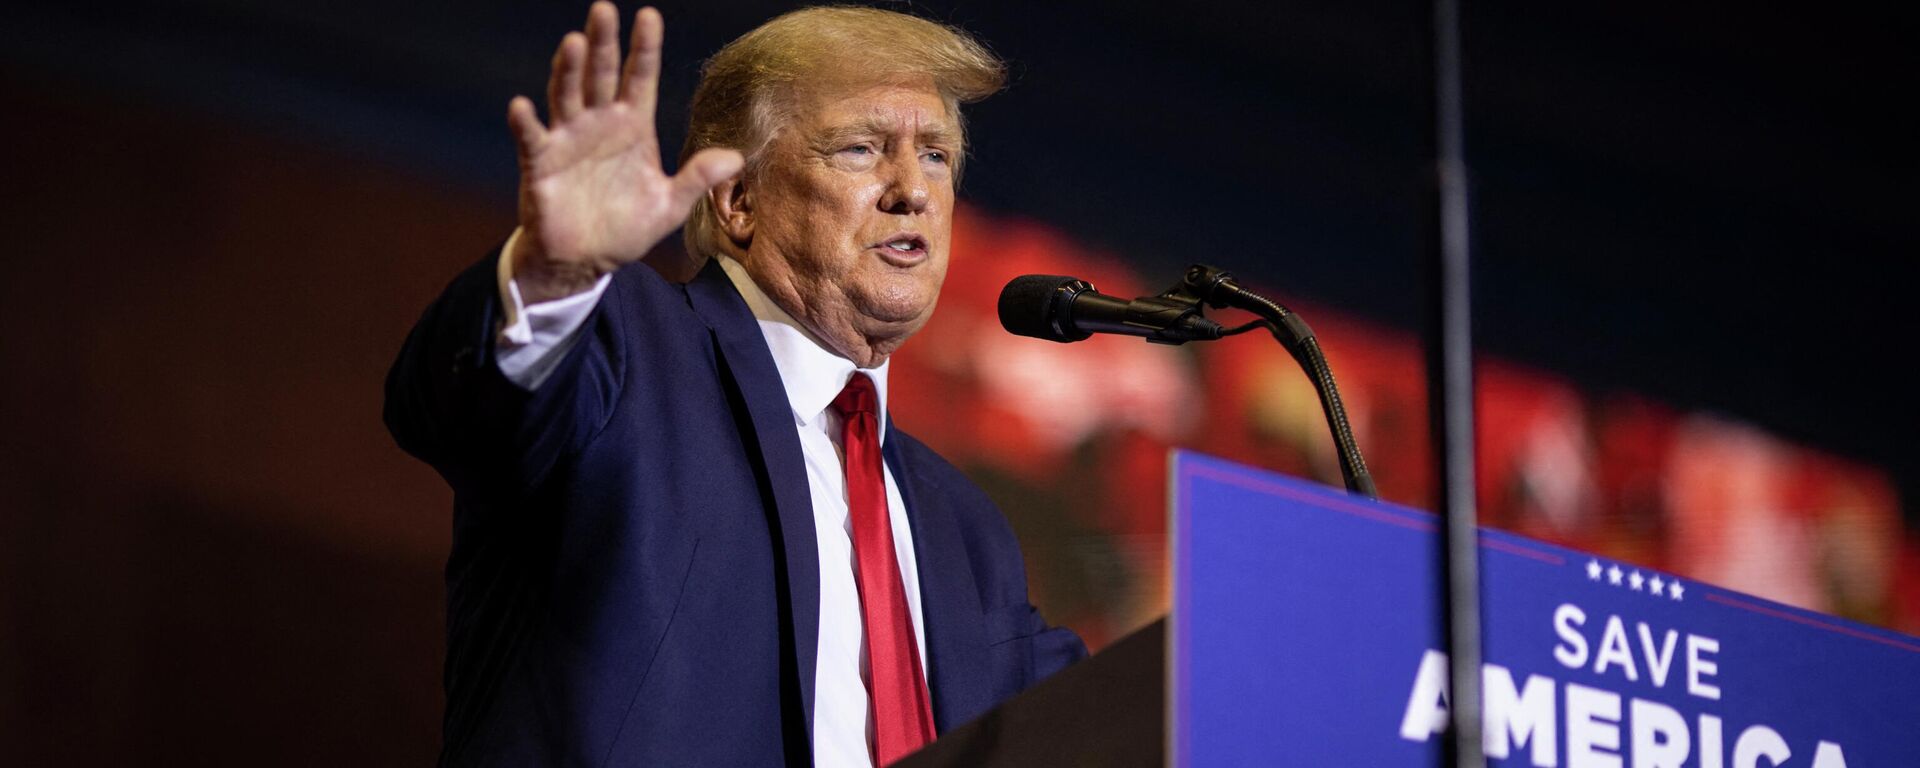 Former President Donald Trump speaks at a rally on May 28, 2022 in Casper, Wyoming - Sputnik International, 1920, 24.06.2022